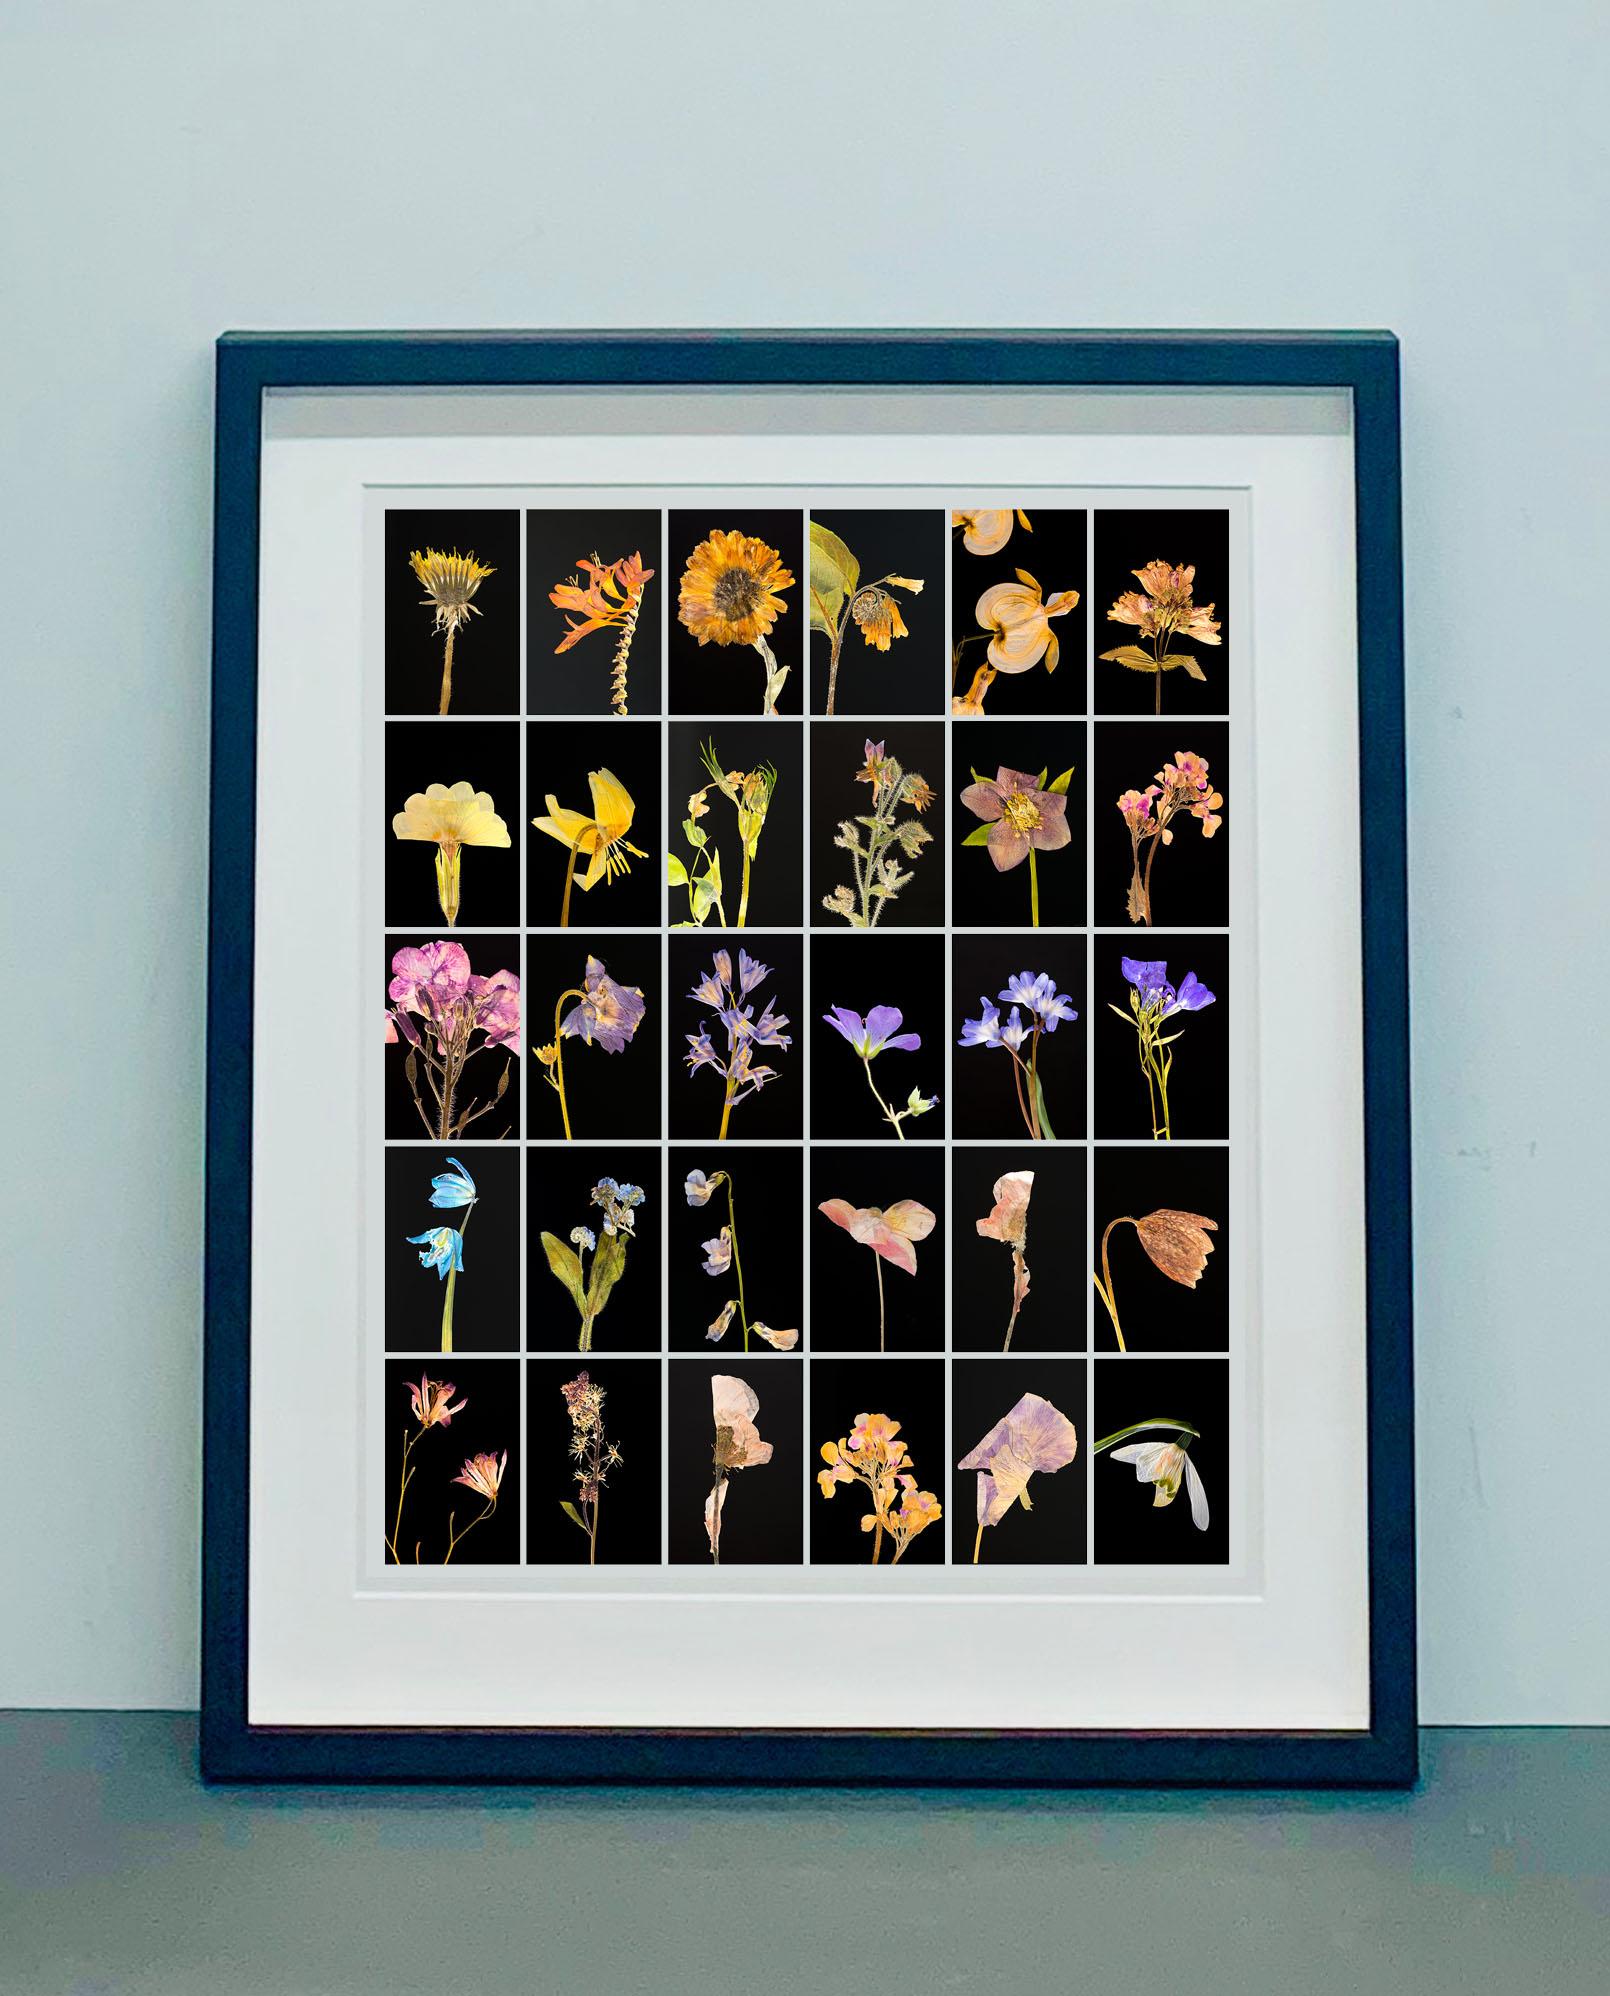 Dandelion - Botanical Color Photography Prints - Black Still-Life Photograph by Martin Parker